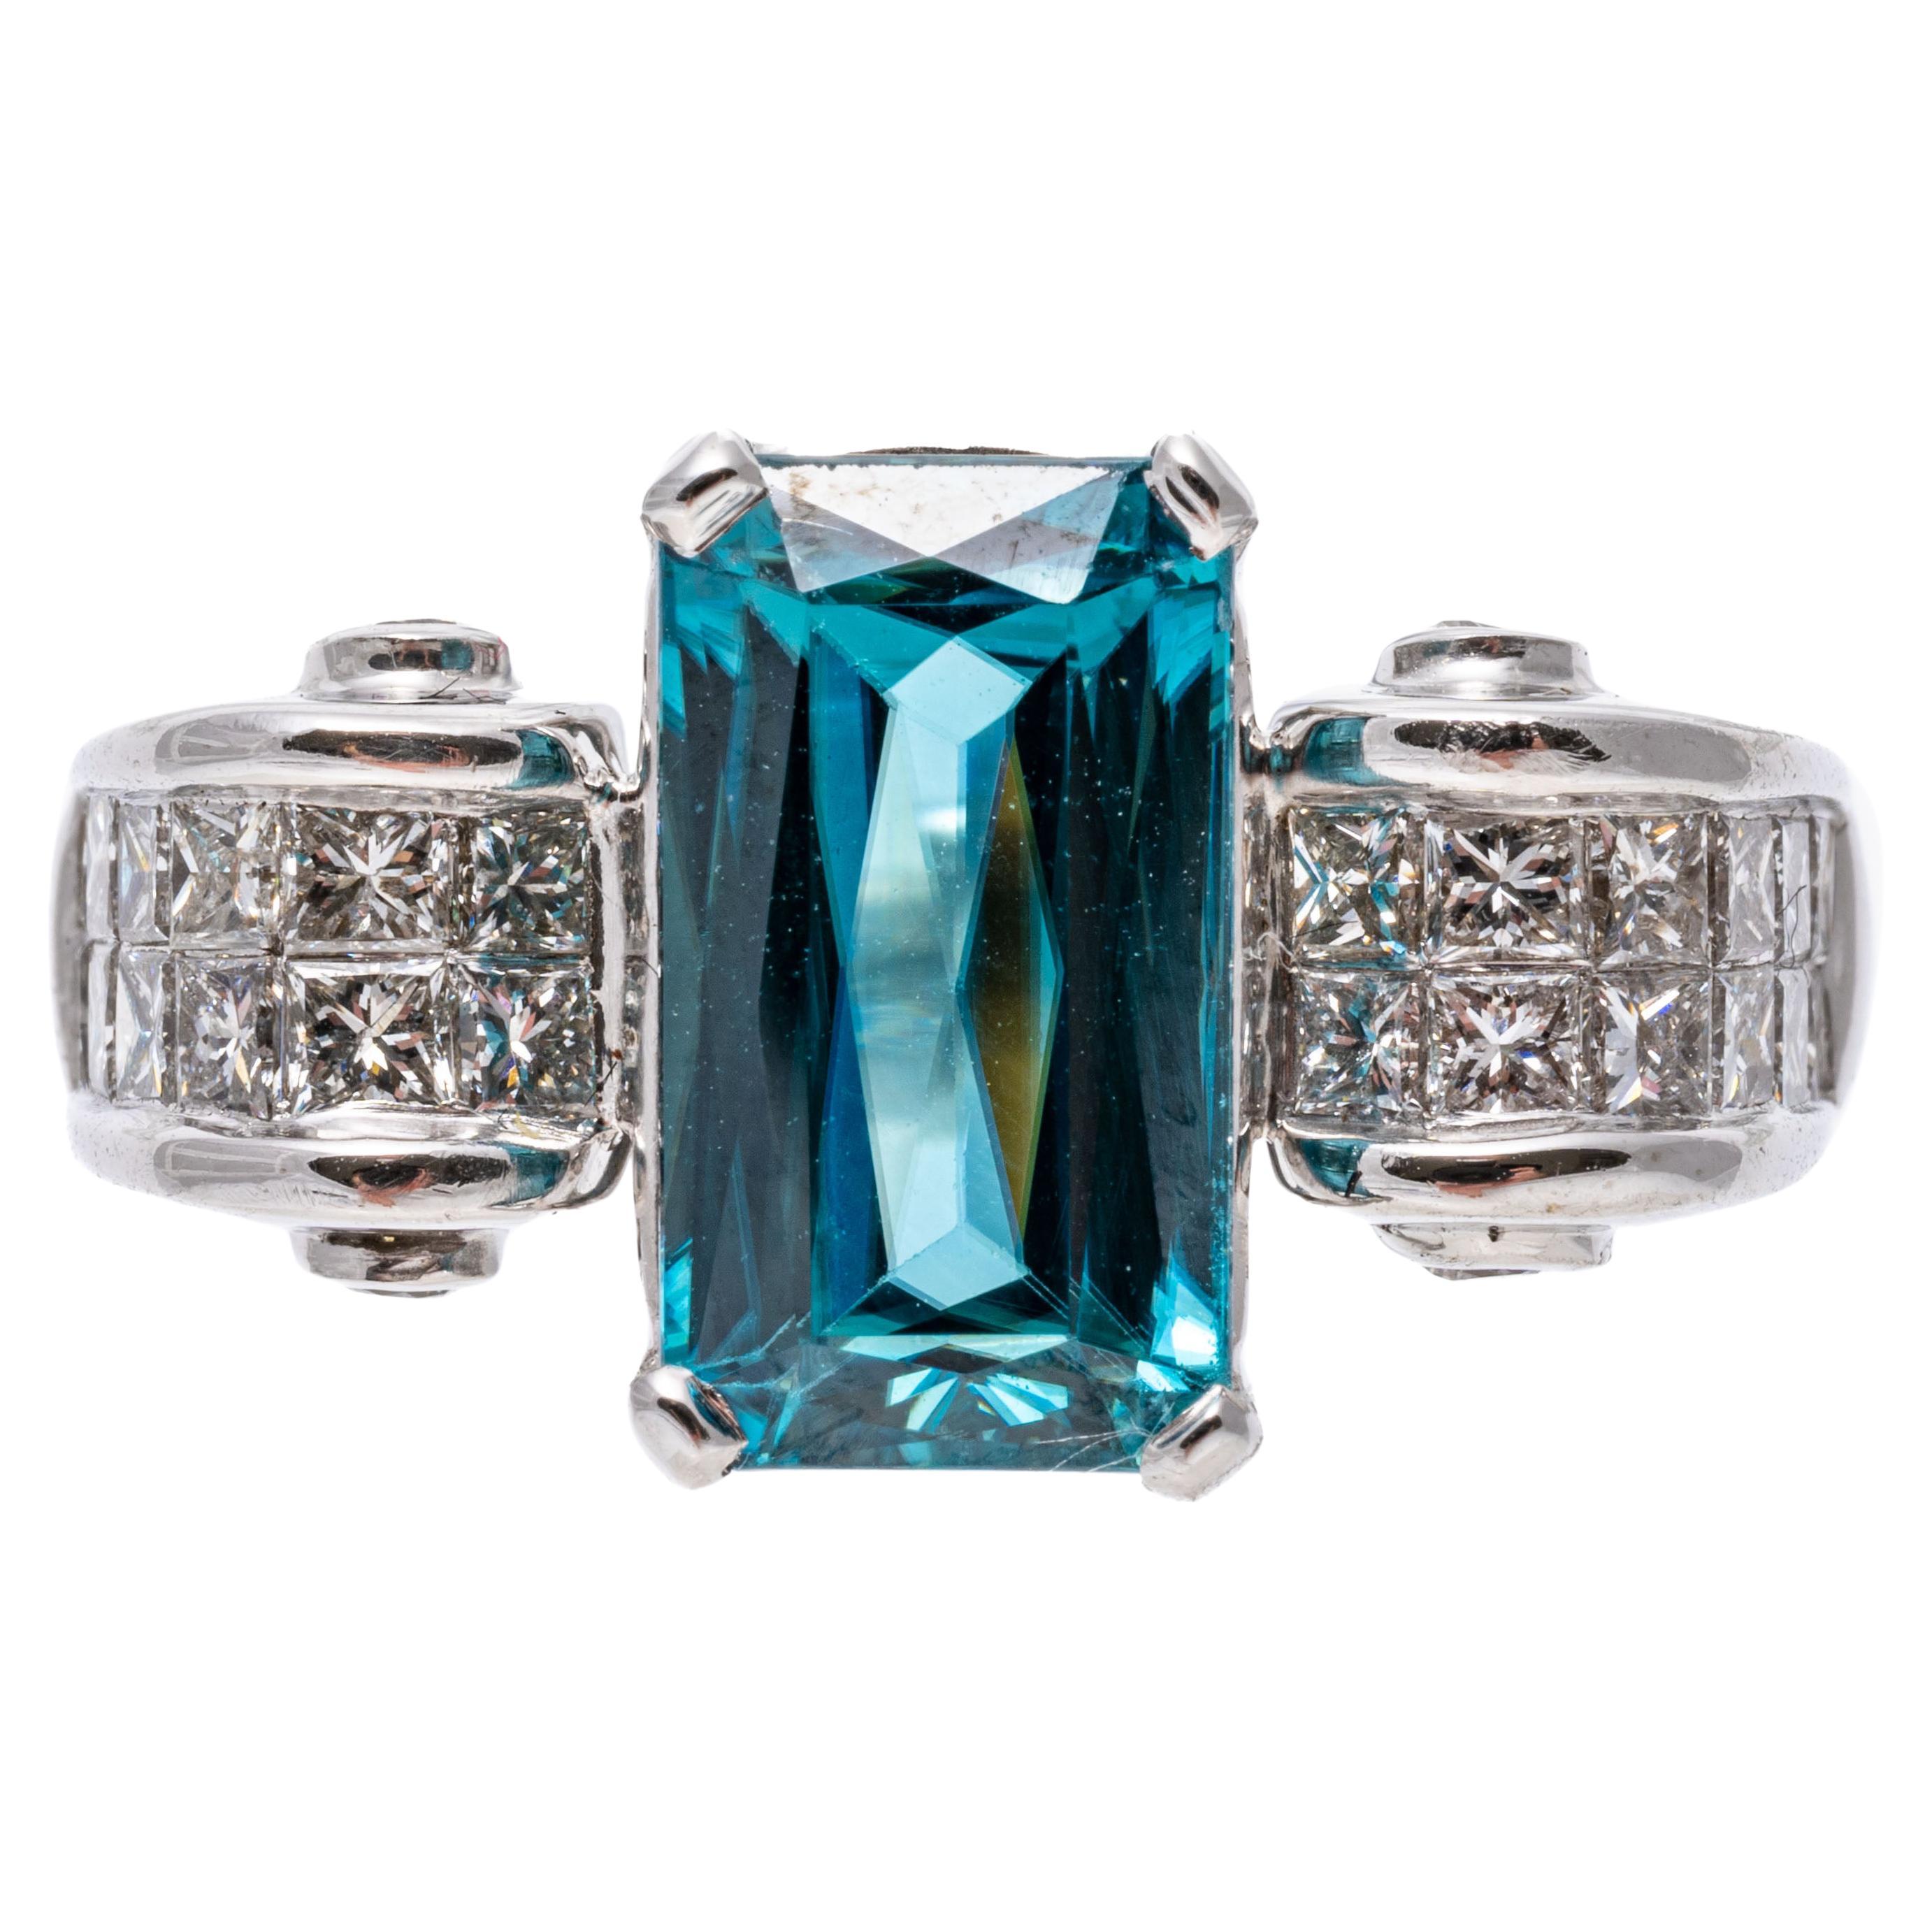 14k White Gold Scrolled Calibre Princess Cut Diamond And Blue Topaz Ring